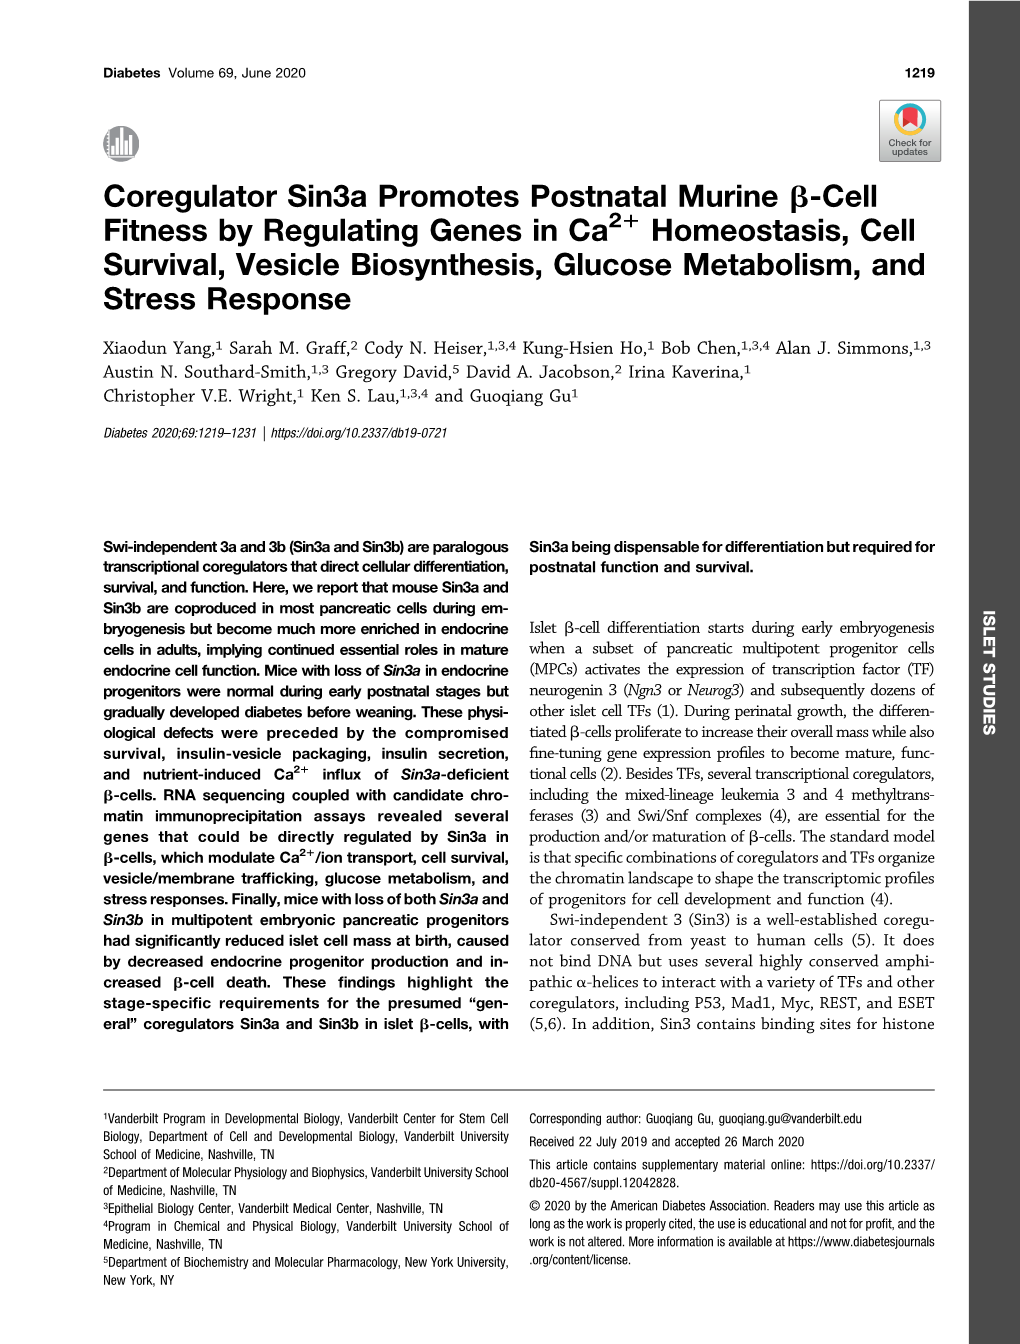 Coregulator Sin3a Promotes Postnatal Murine B-Cell Fitness